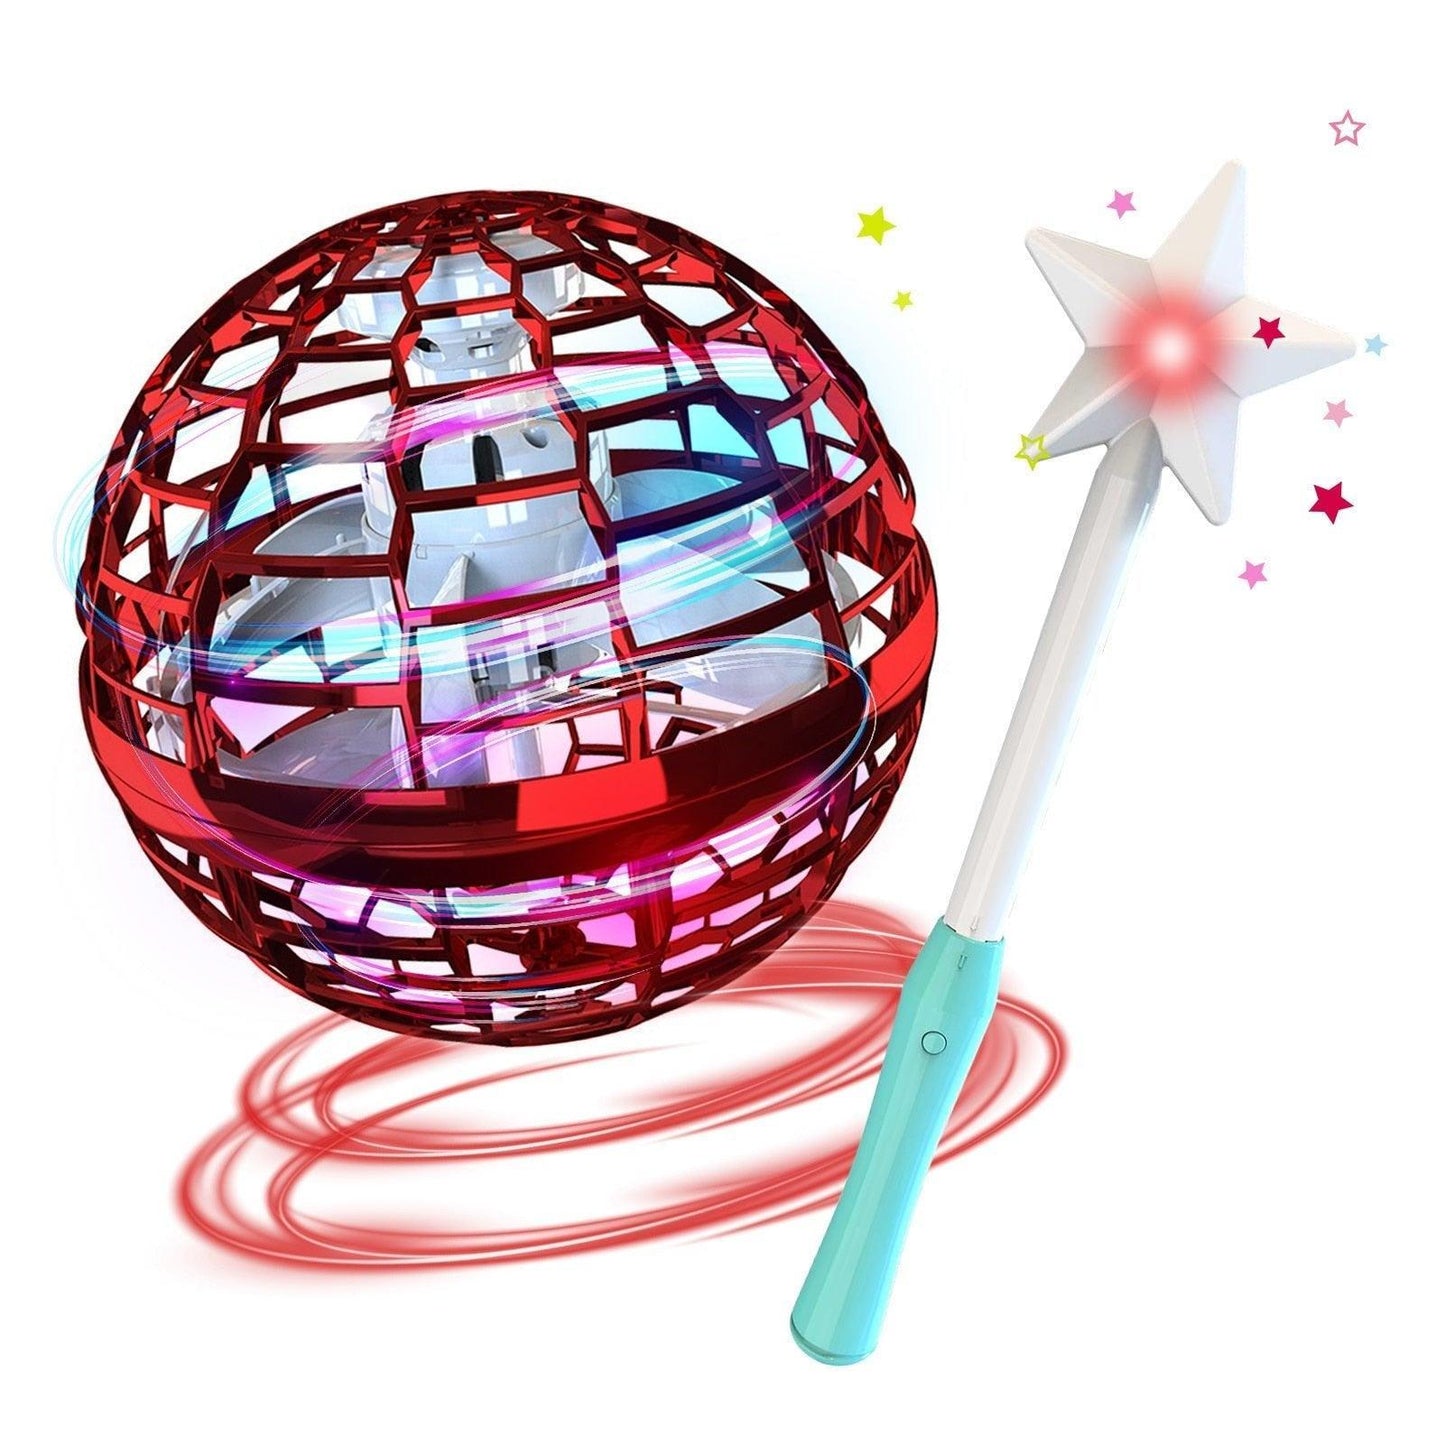  Spinner Flying Ball sold by Fleurlovin, Free Shipping Worldwide